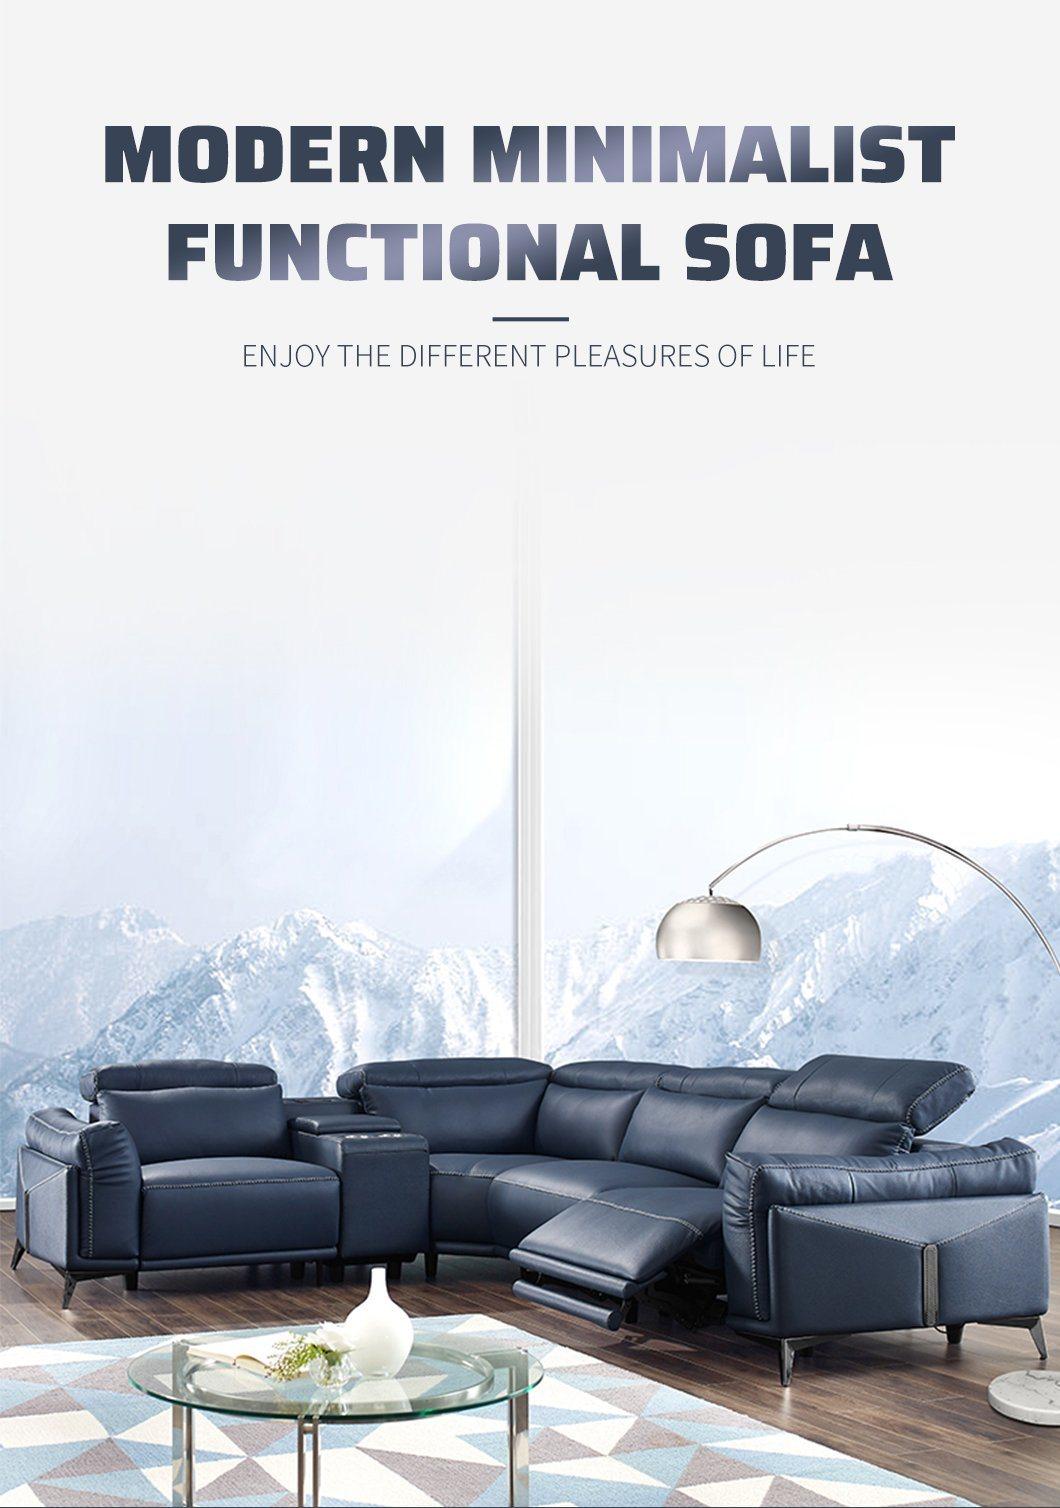 2022 New Arrive Modern Design Recliner Sofa Living Room Furniture